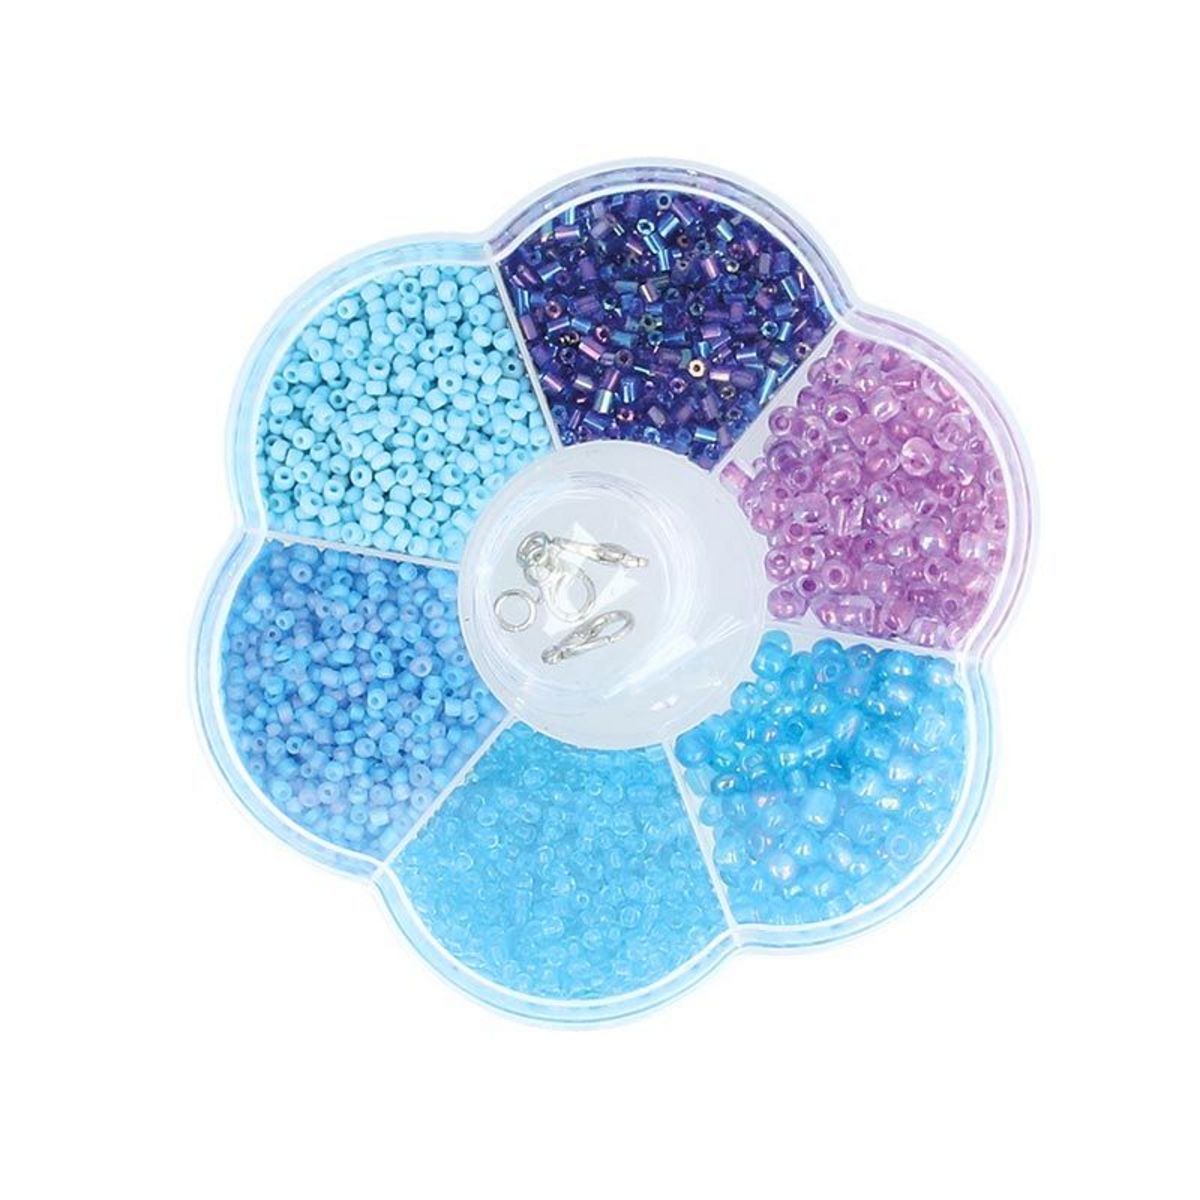 Artemio Assortiment de perles en plastique bleu - 130 g